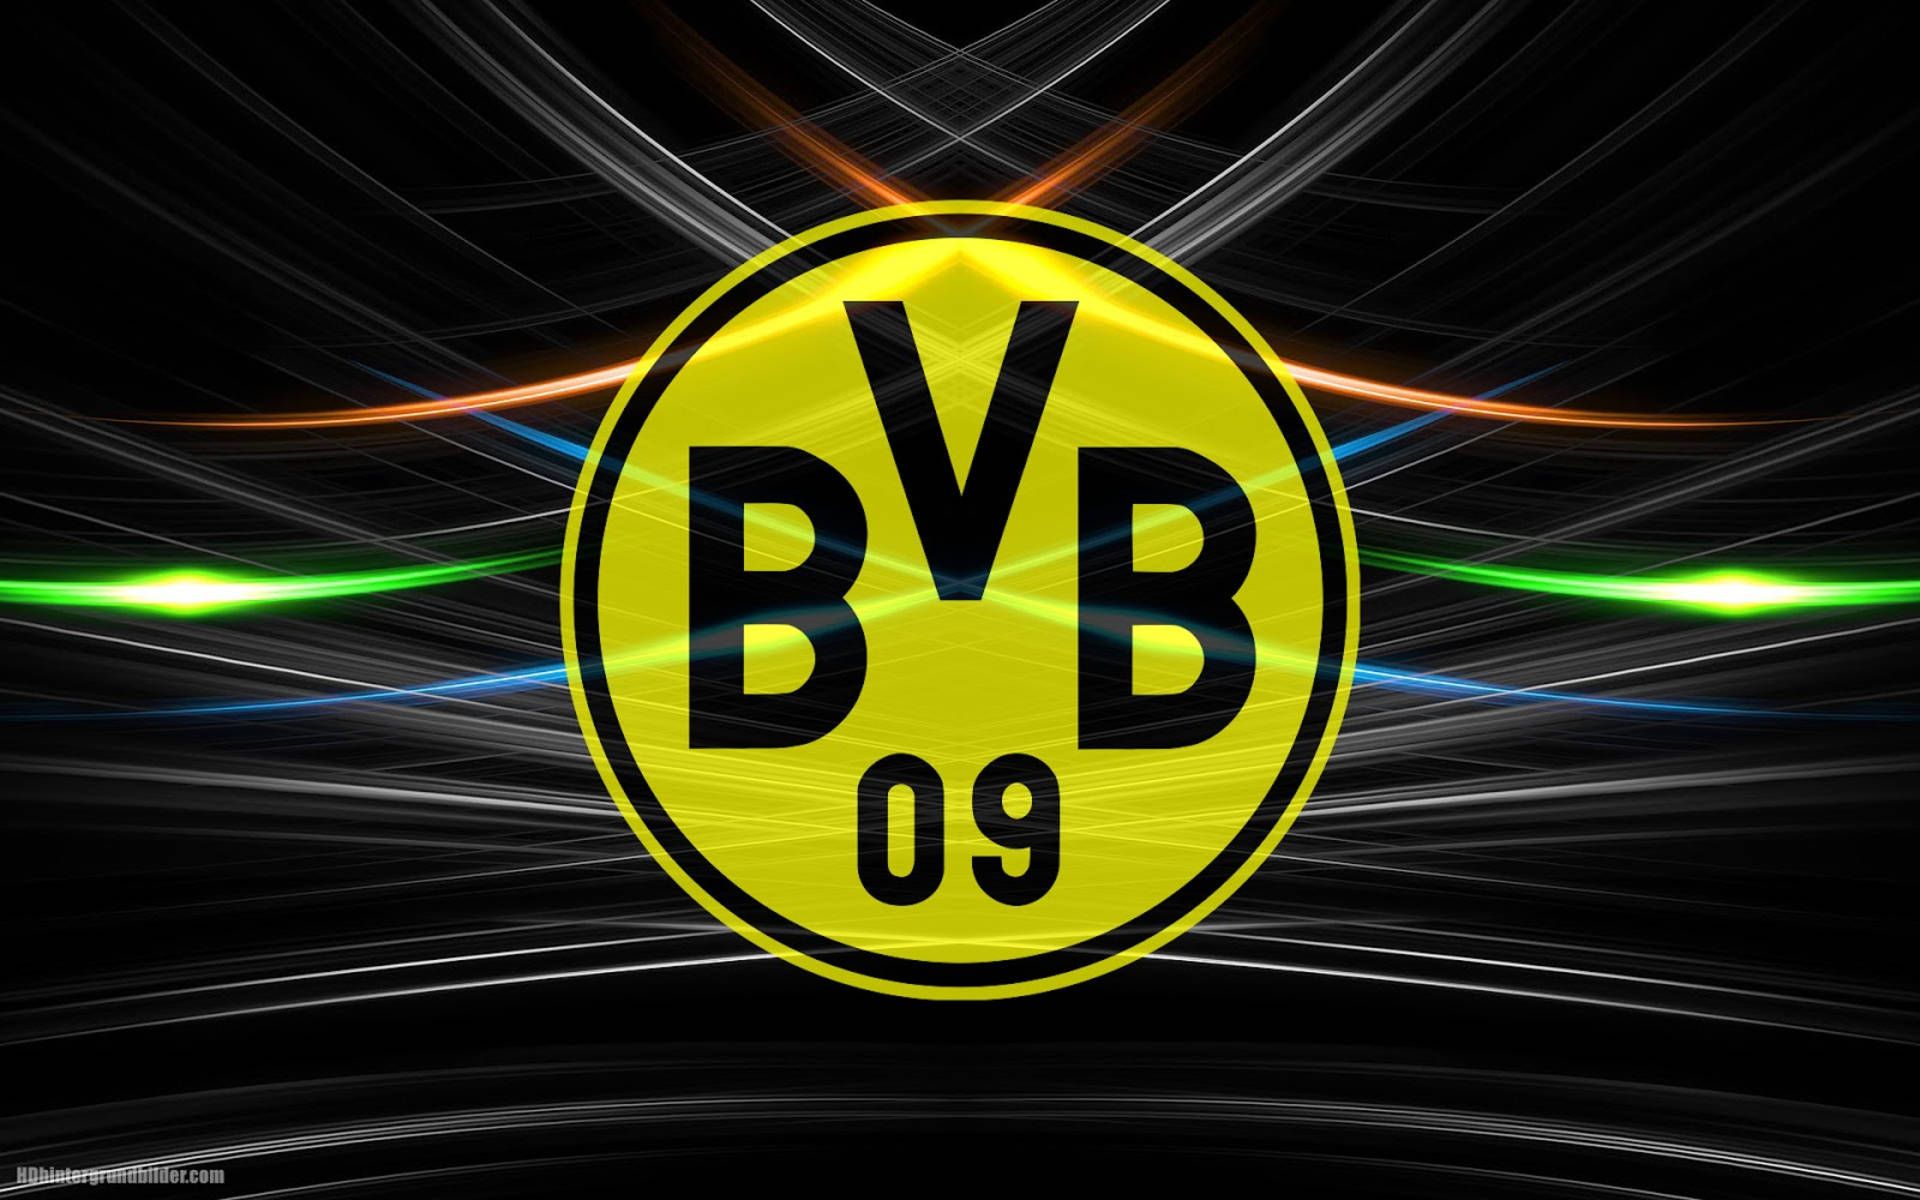  BVB HD Hintergrundbild 1920x1200. Free Borussia Dortmund Wallpaper Downloads, Borussia Dortmund Wallpaper for FREE